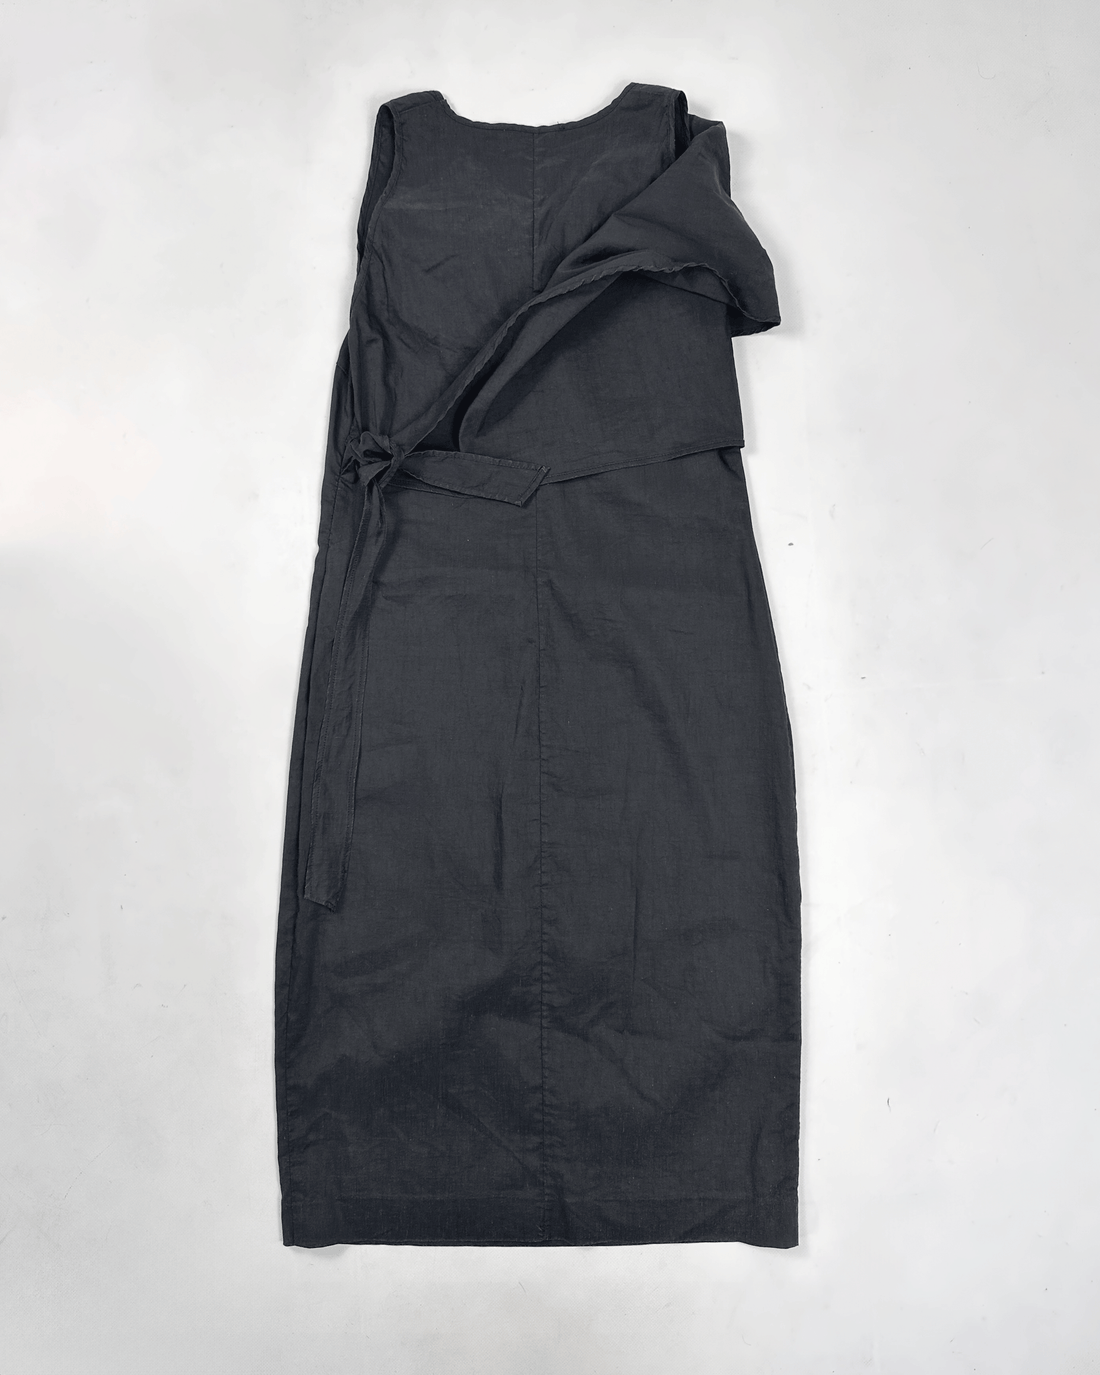 Sarah Paccini Utility Black Dress 2000's